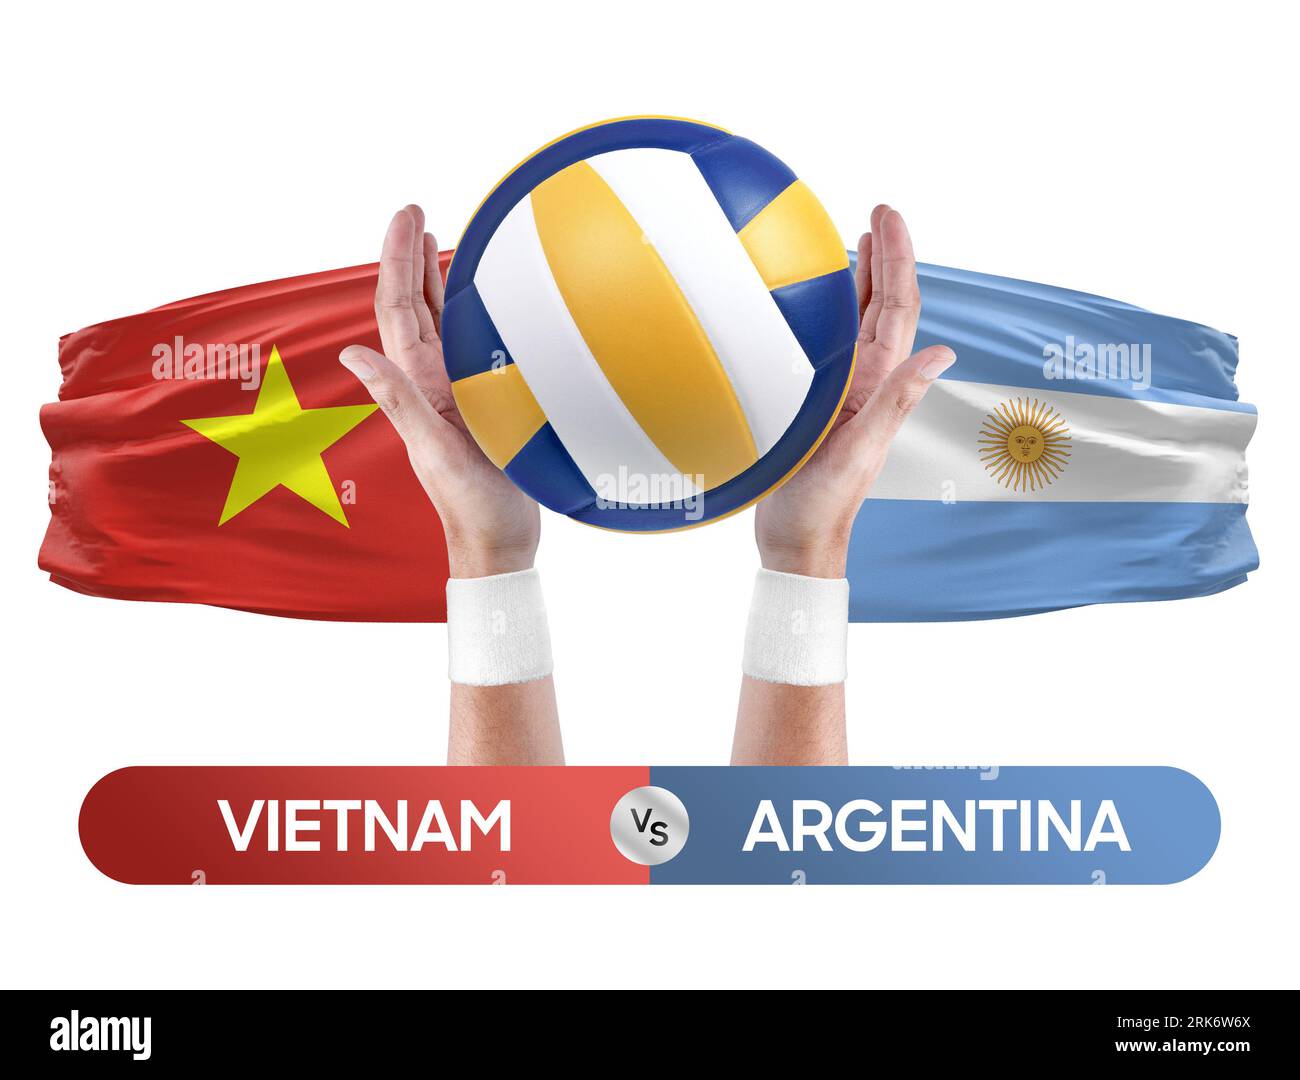 Vietnam gegen Argentinien Nationalmannschaften Volleyball Volleyball Volleyball Match Competition Concept. Stockfoto